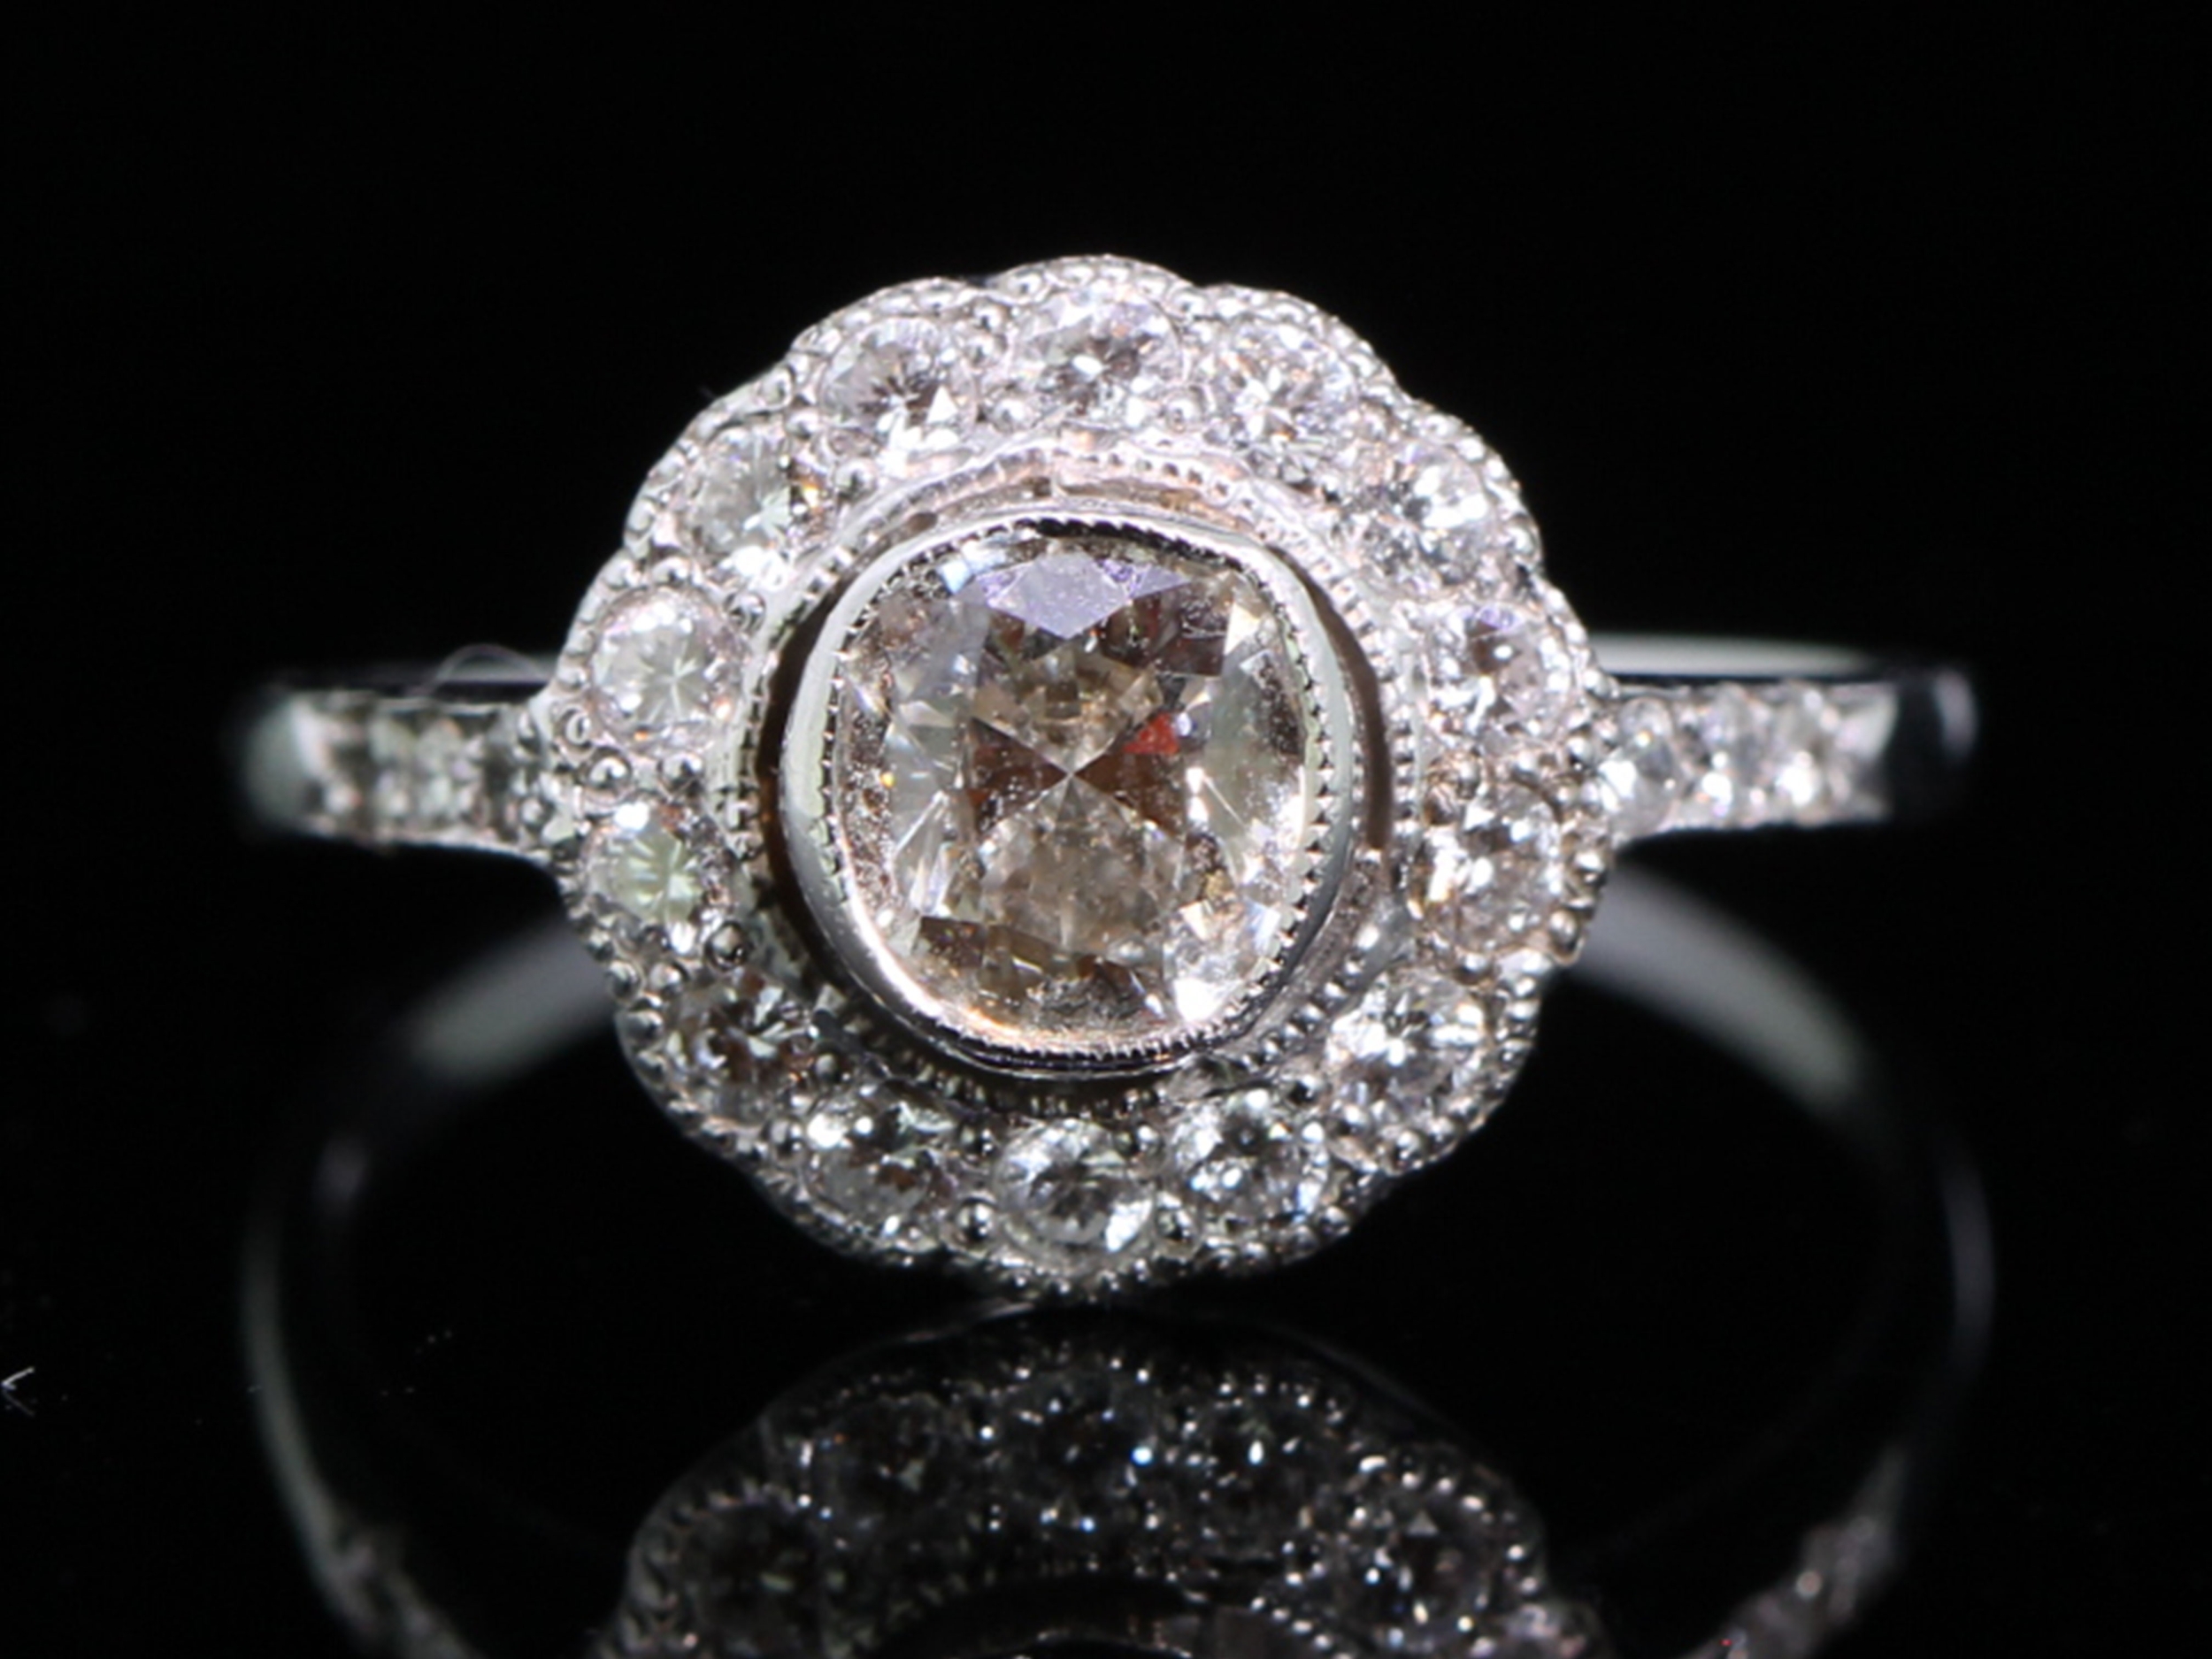  breathtaking vintage inspired 18ct gold diamond halo ring